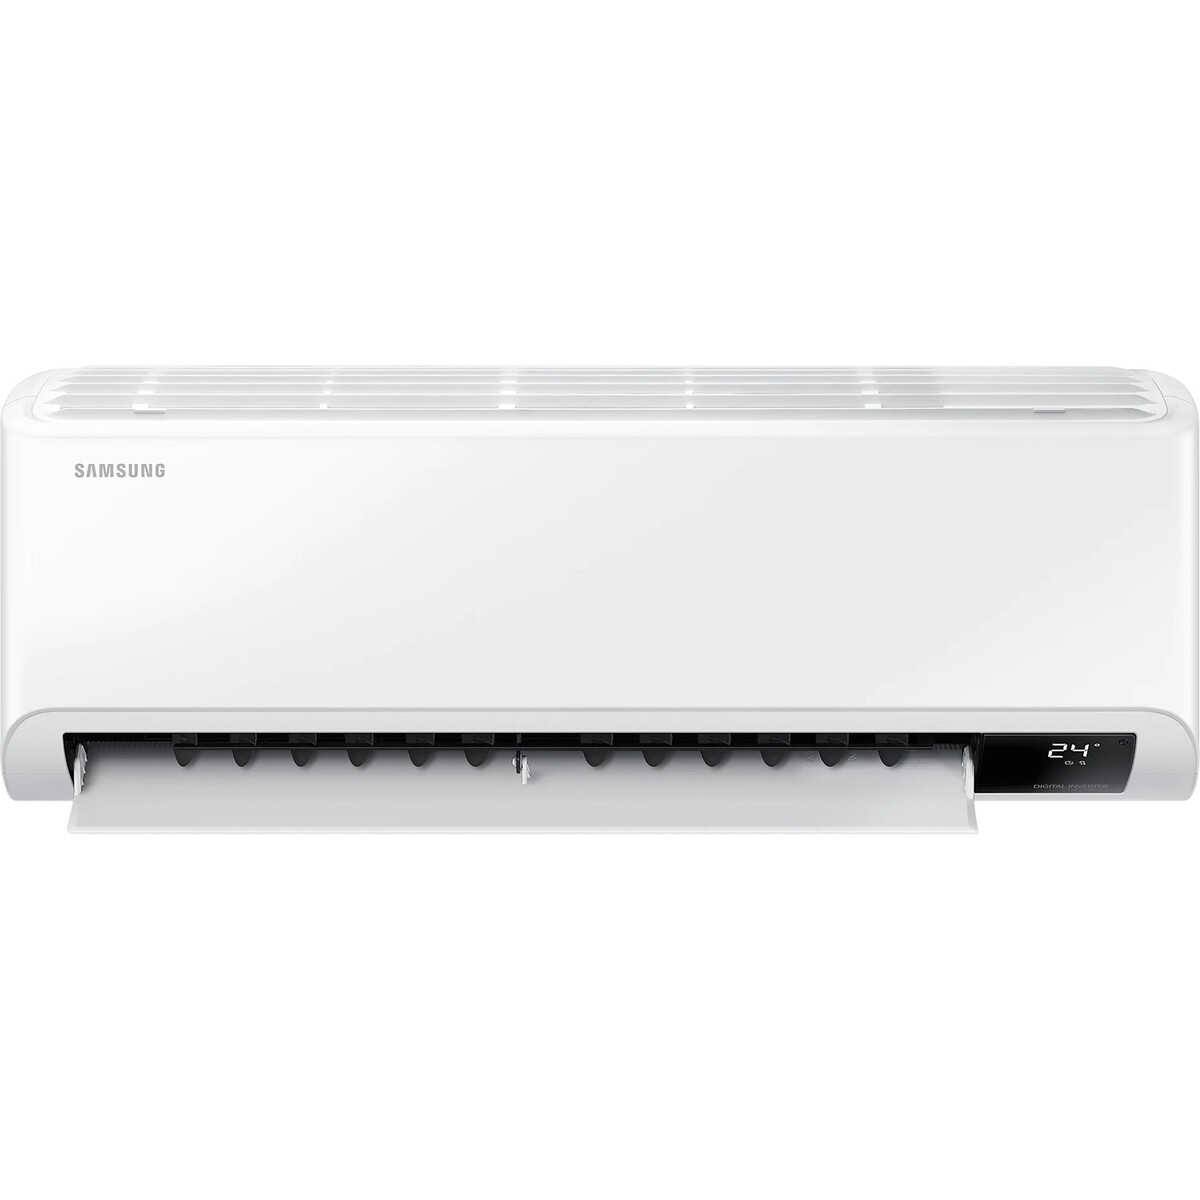 Samsung Inverter Air Conditioner AR18BY5YAWK 1.5 Ton 5*